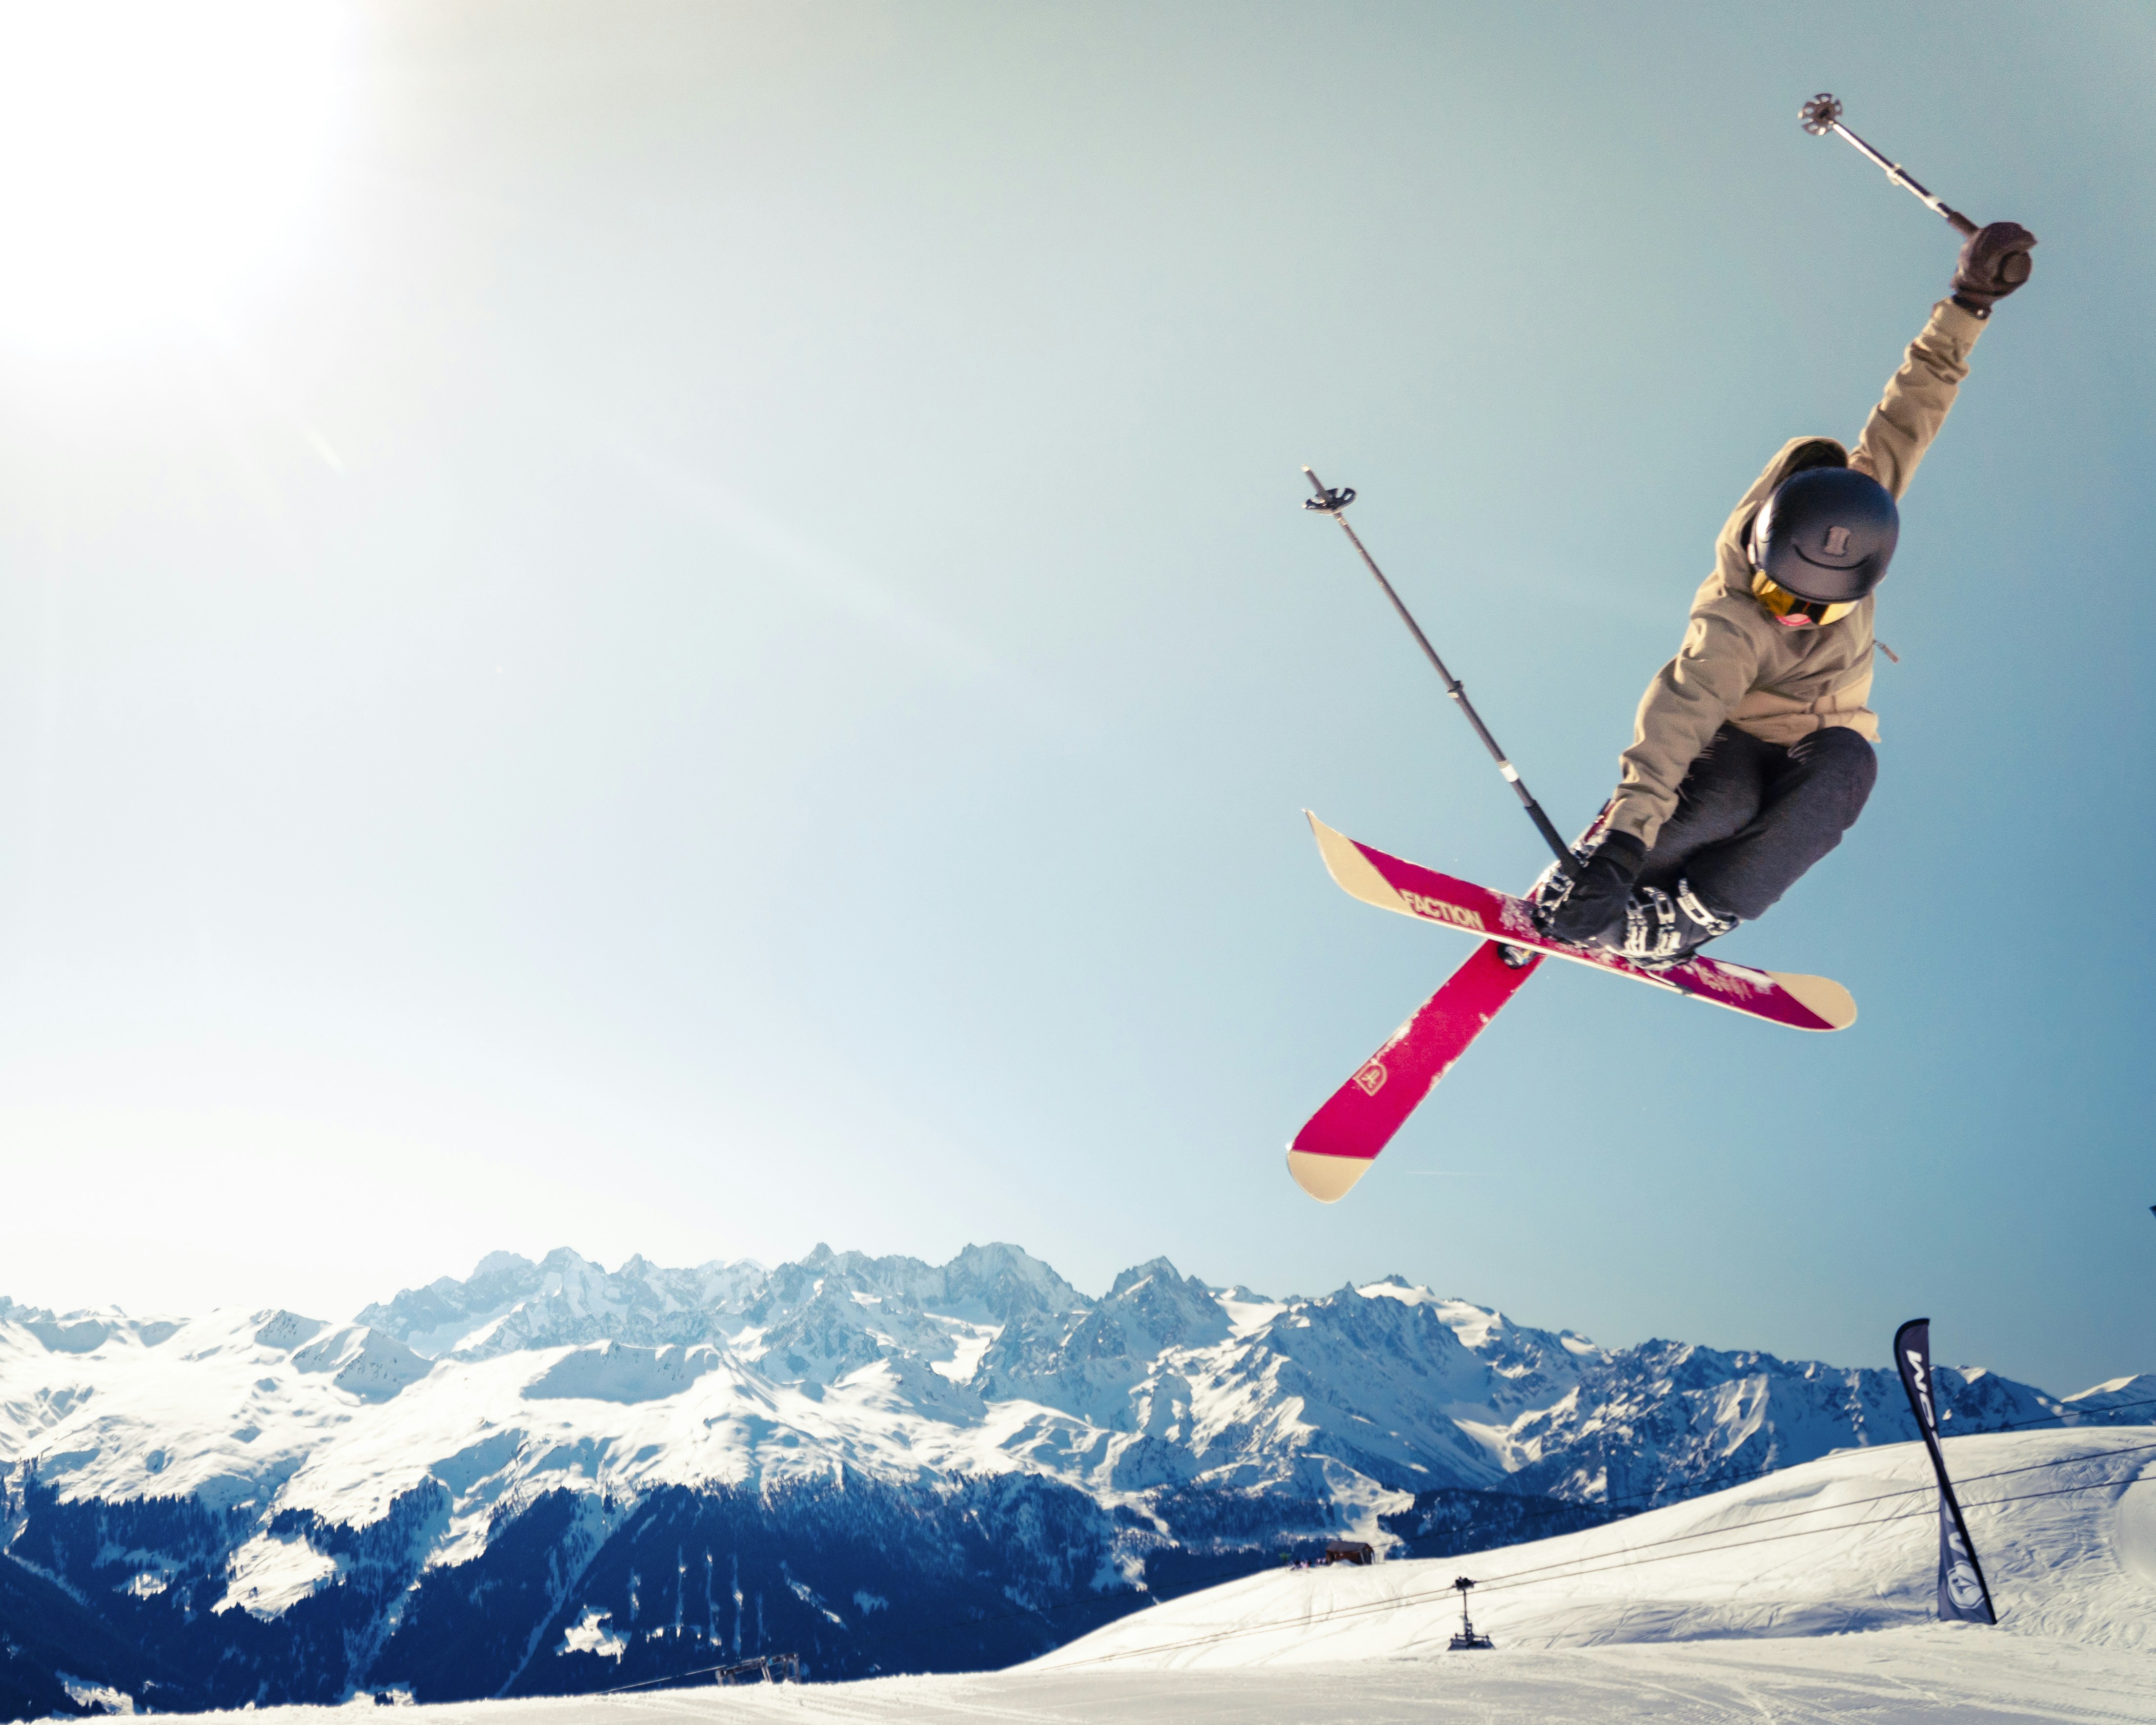 Ski Jump Pictures Download Free Images on Unsplash